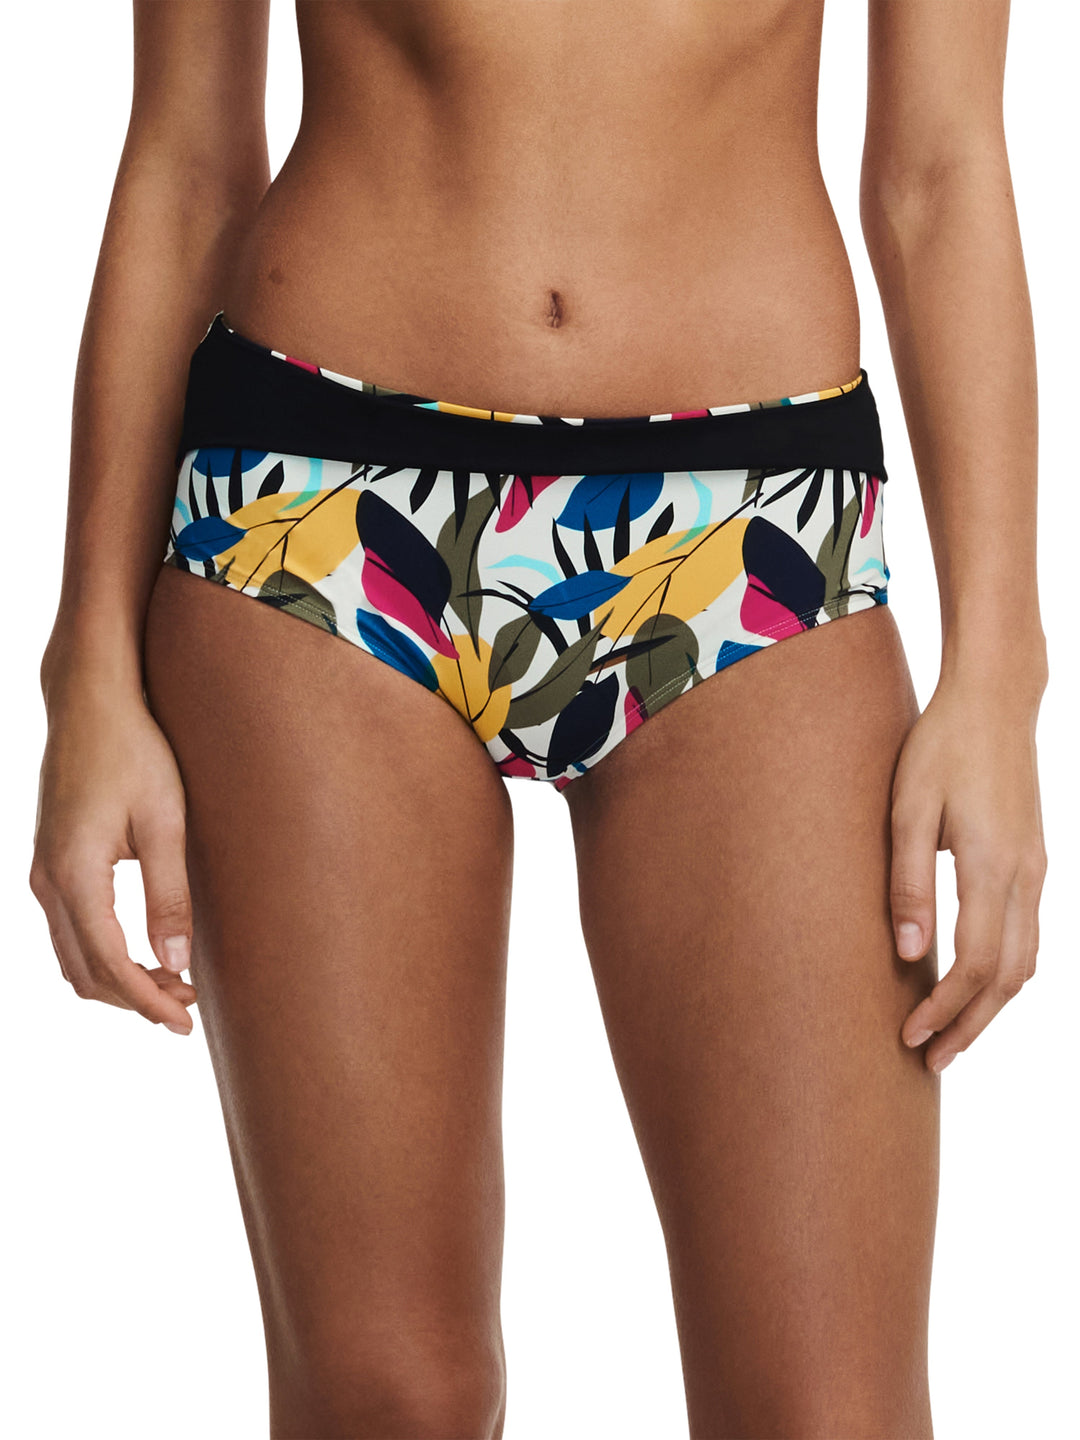 Femilet Swimwear - Honduras Full Bikini Brief Multicolor Leaves Full Bikini Brief Femilet Swimwear 